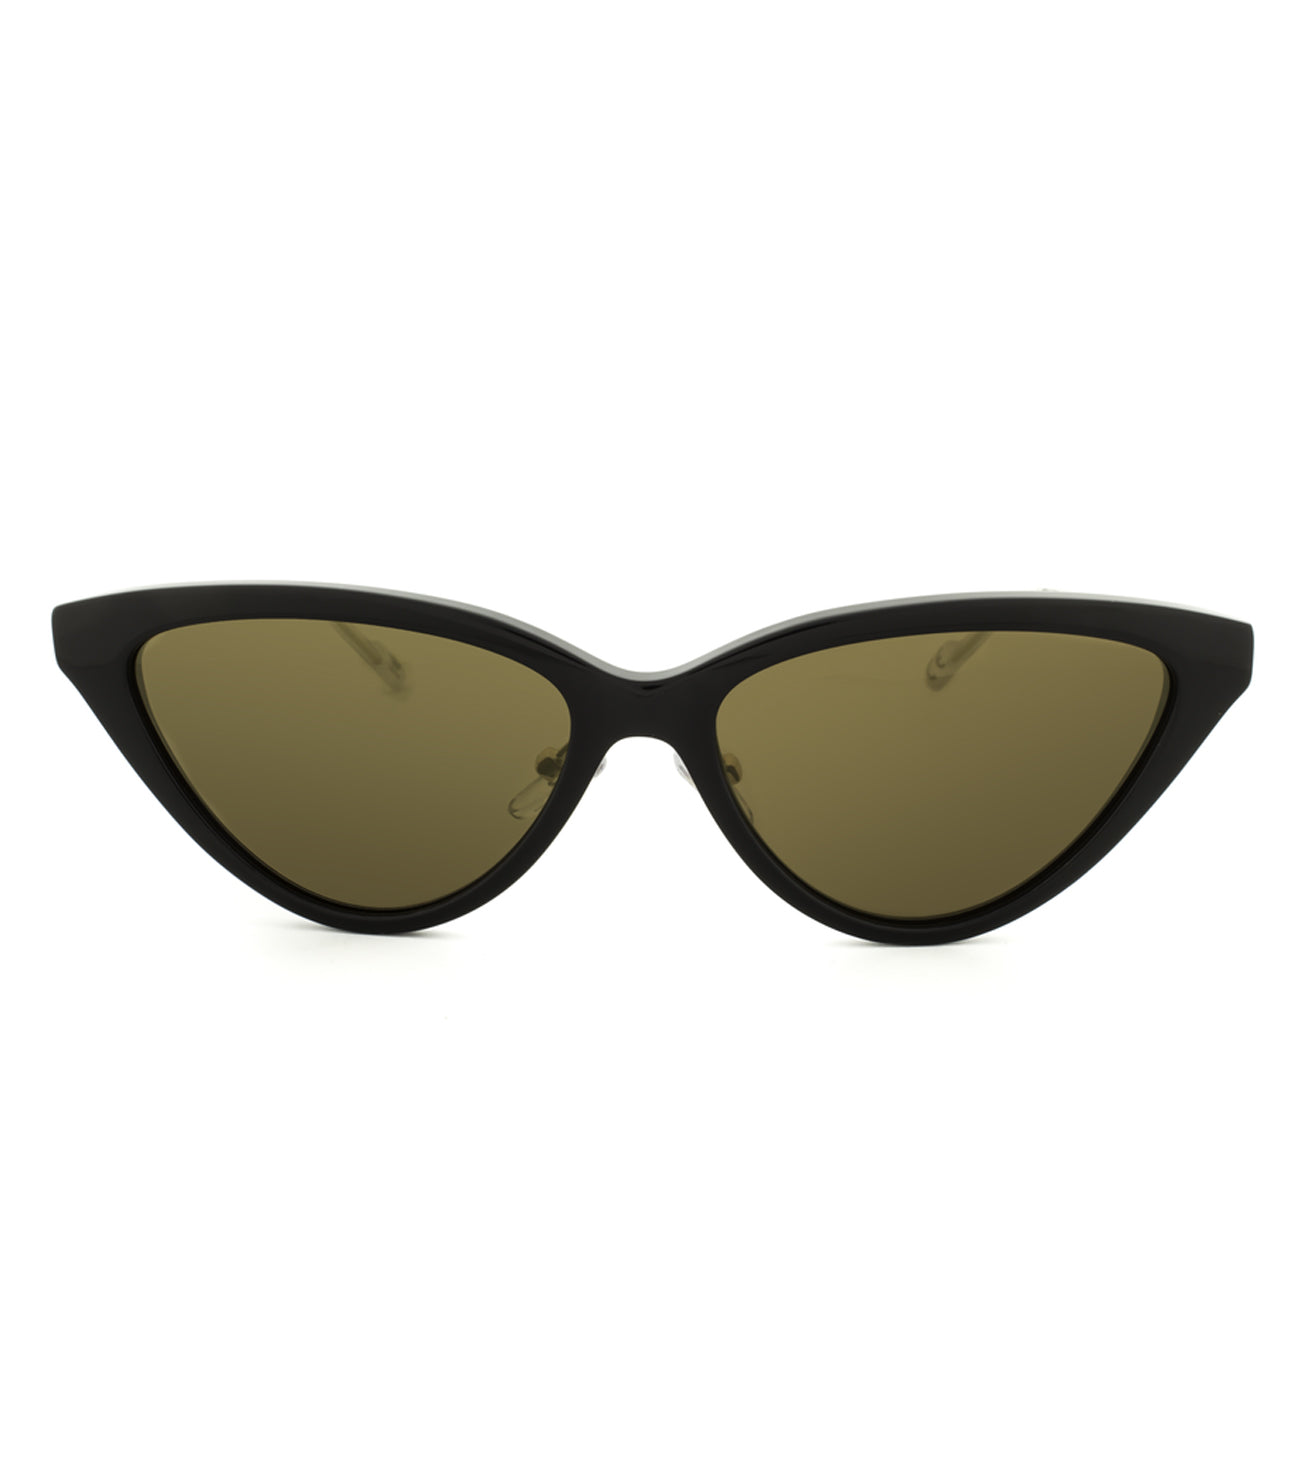 Adidas Originals Women's Brown Cat-eye Sunglasses